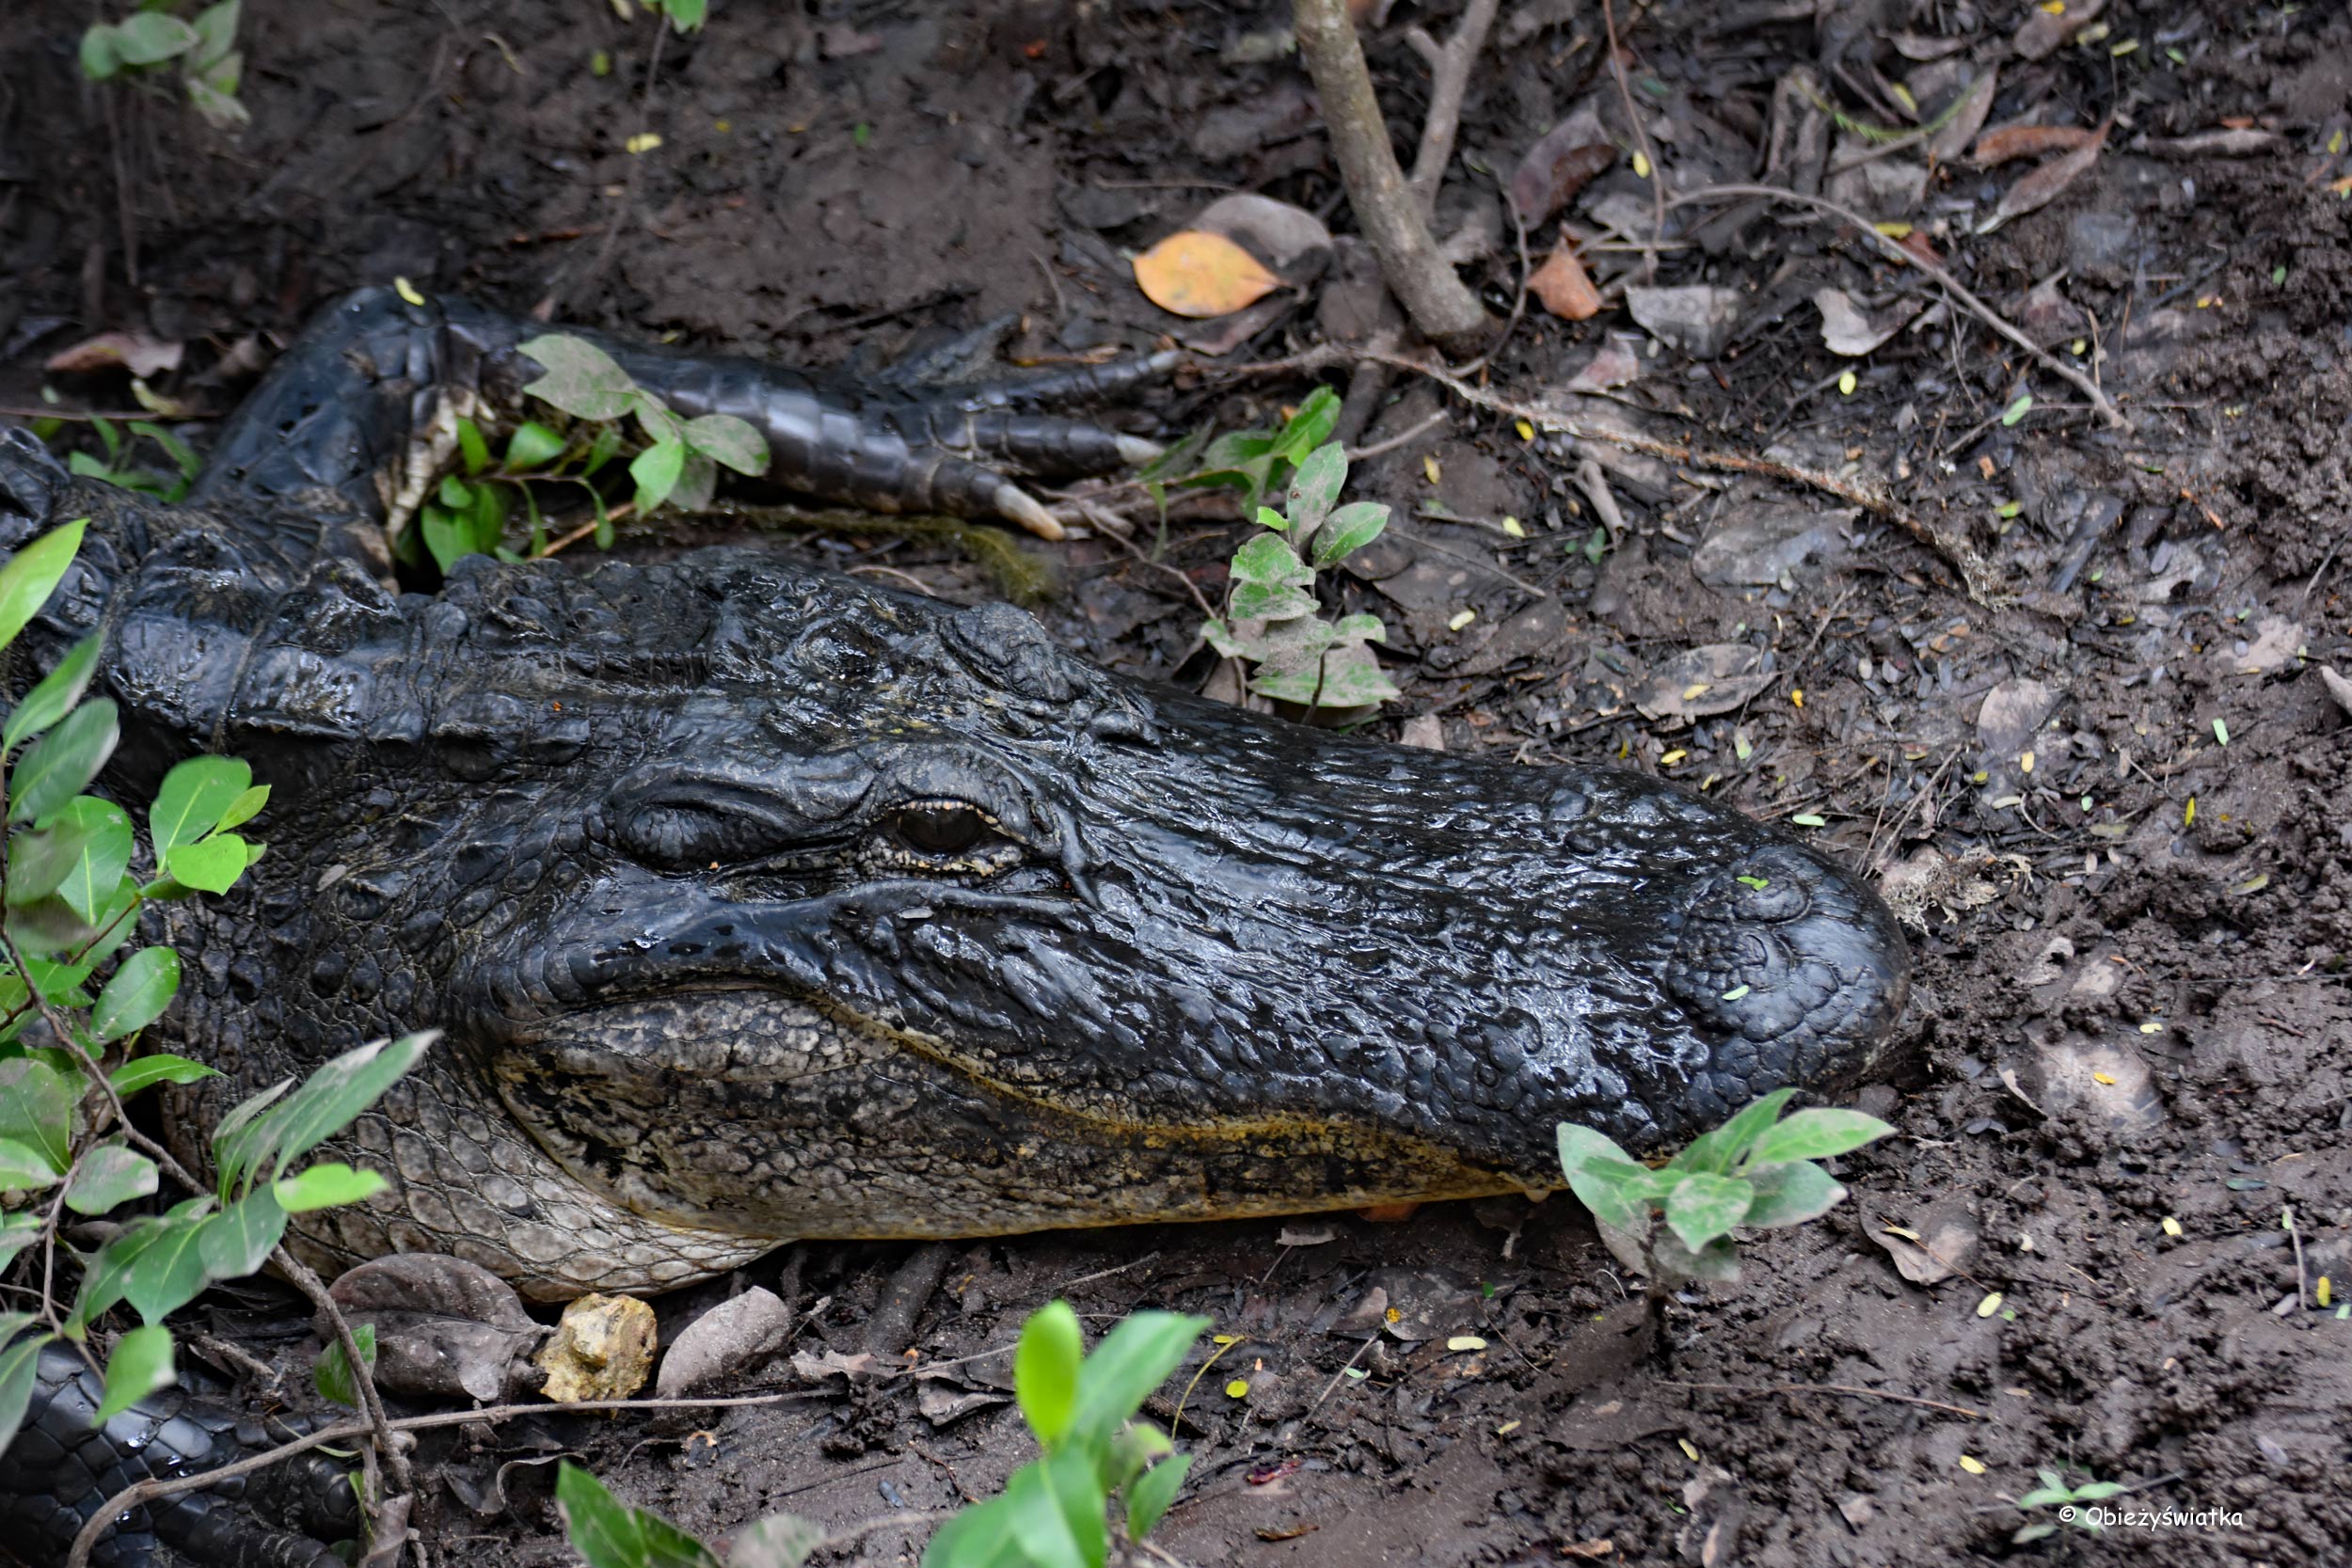 Oko w oko z aligatorem, Everglades, Floryda